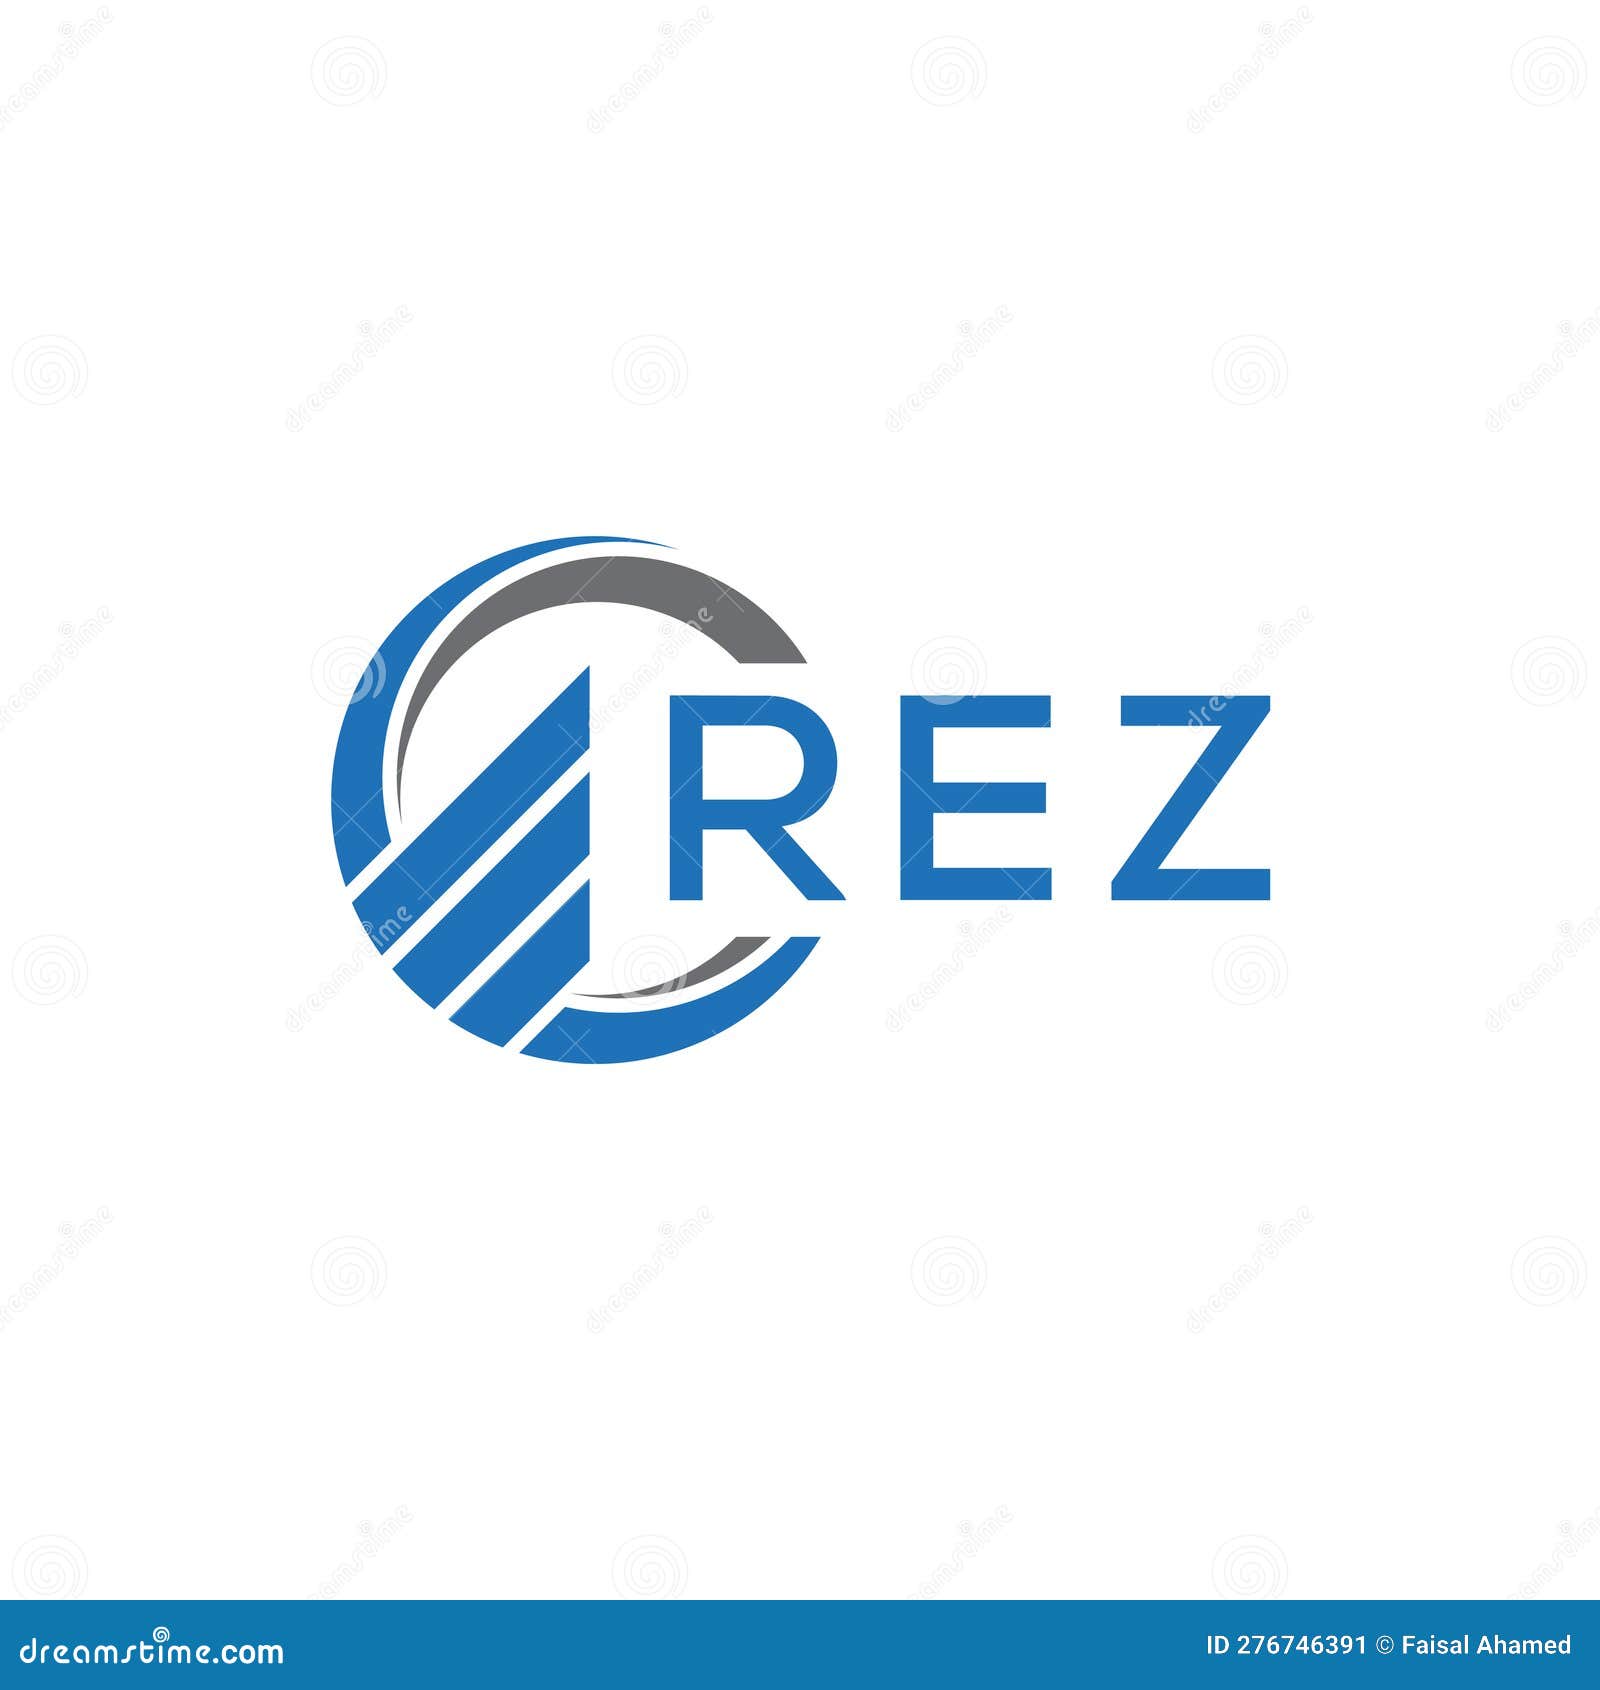 rez abstract technology logo  on white background. rez creative initials letter logo concept